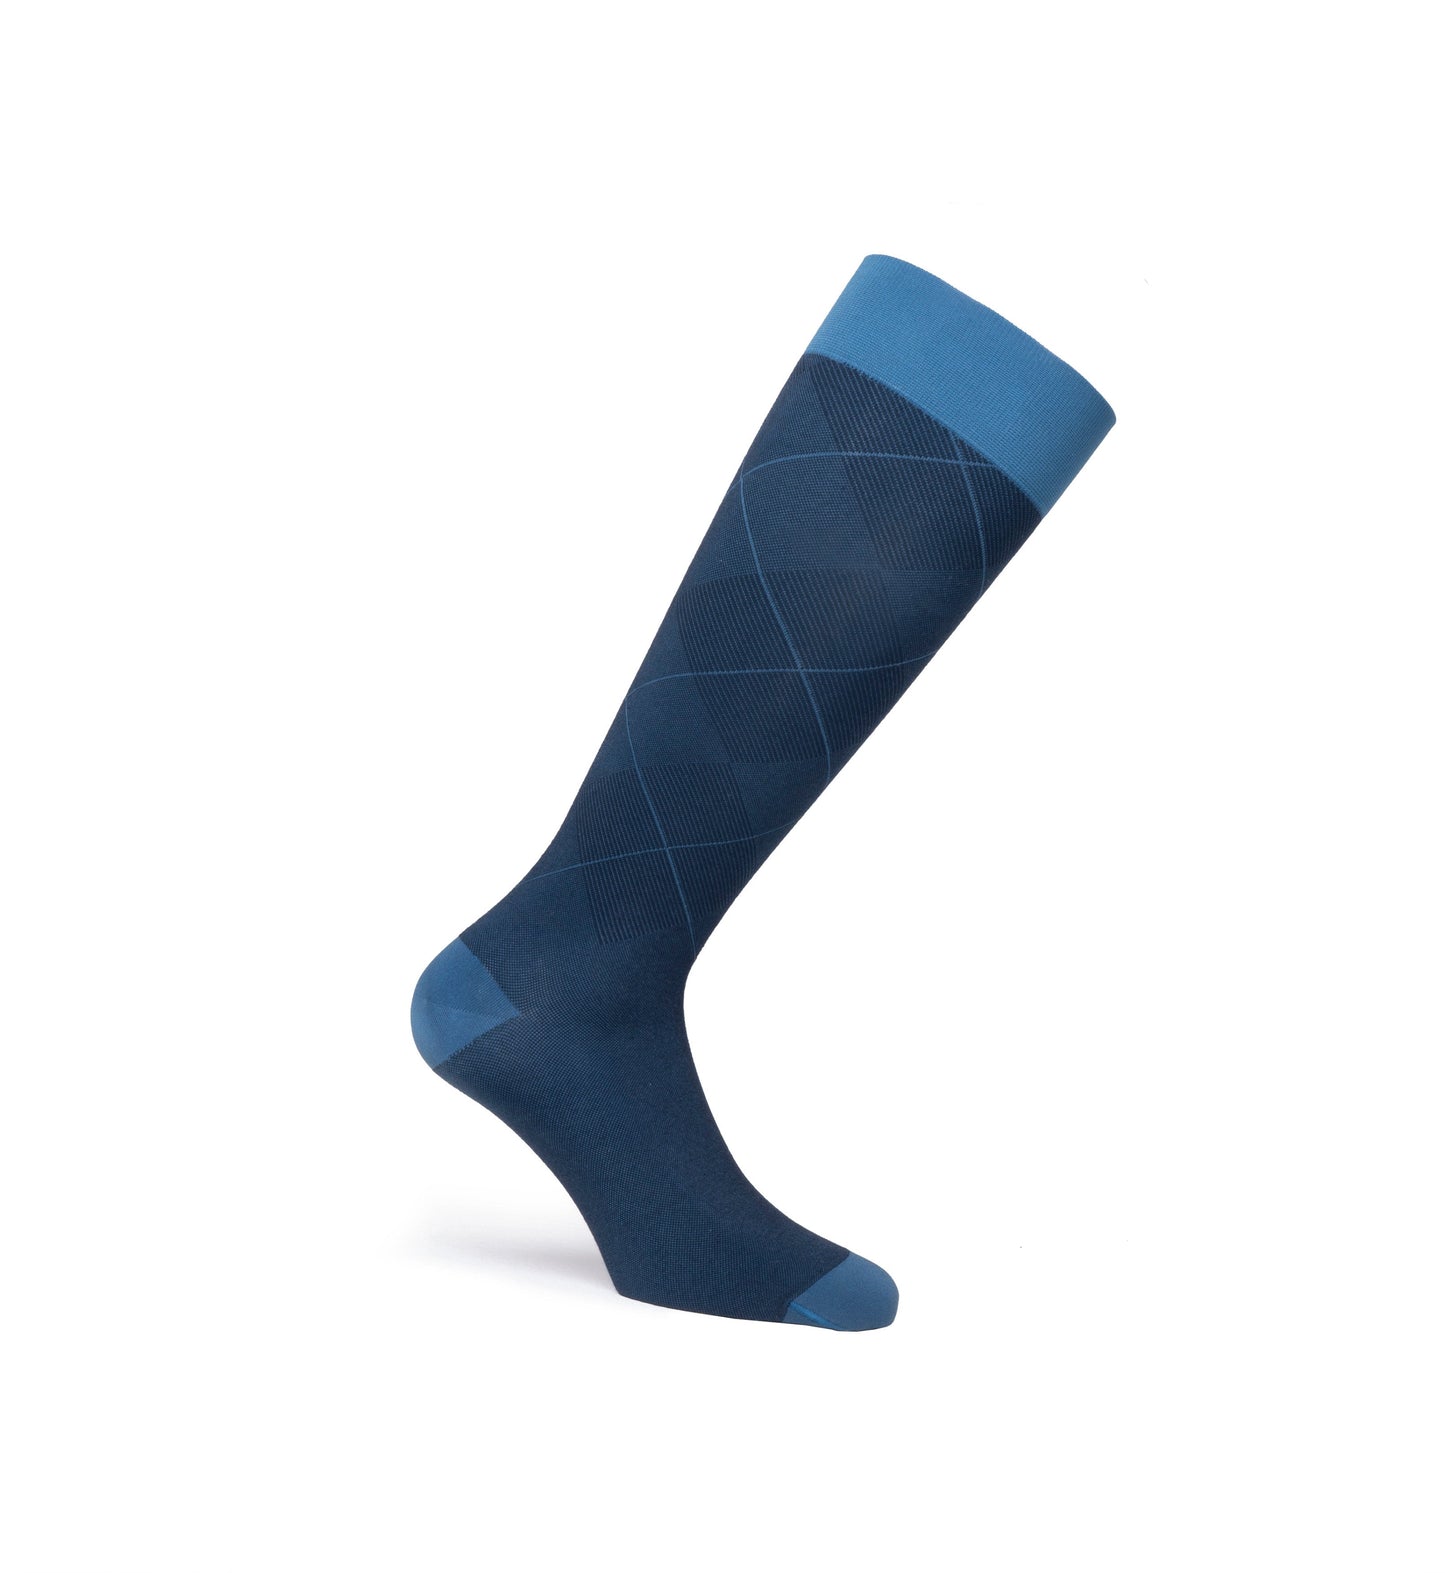 JOBST Casual Pattern Compression Socks 15-20 mmHg, Knee High, Closed Toe Full Calf Long Length